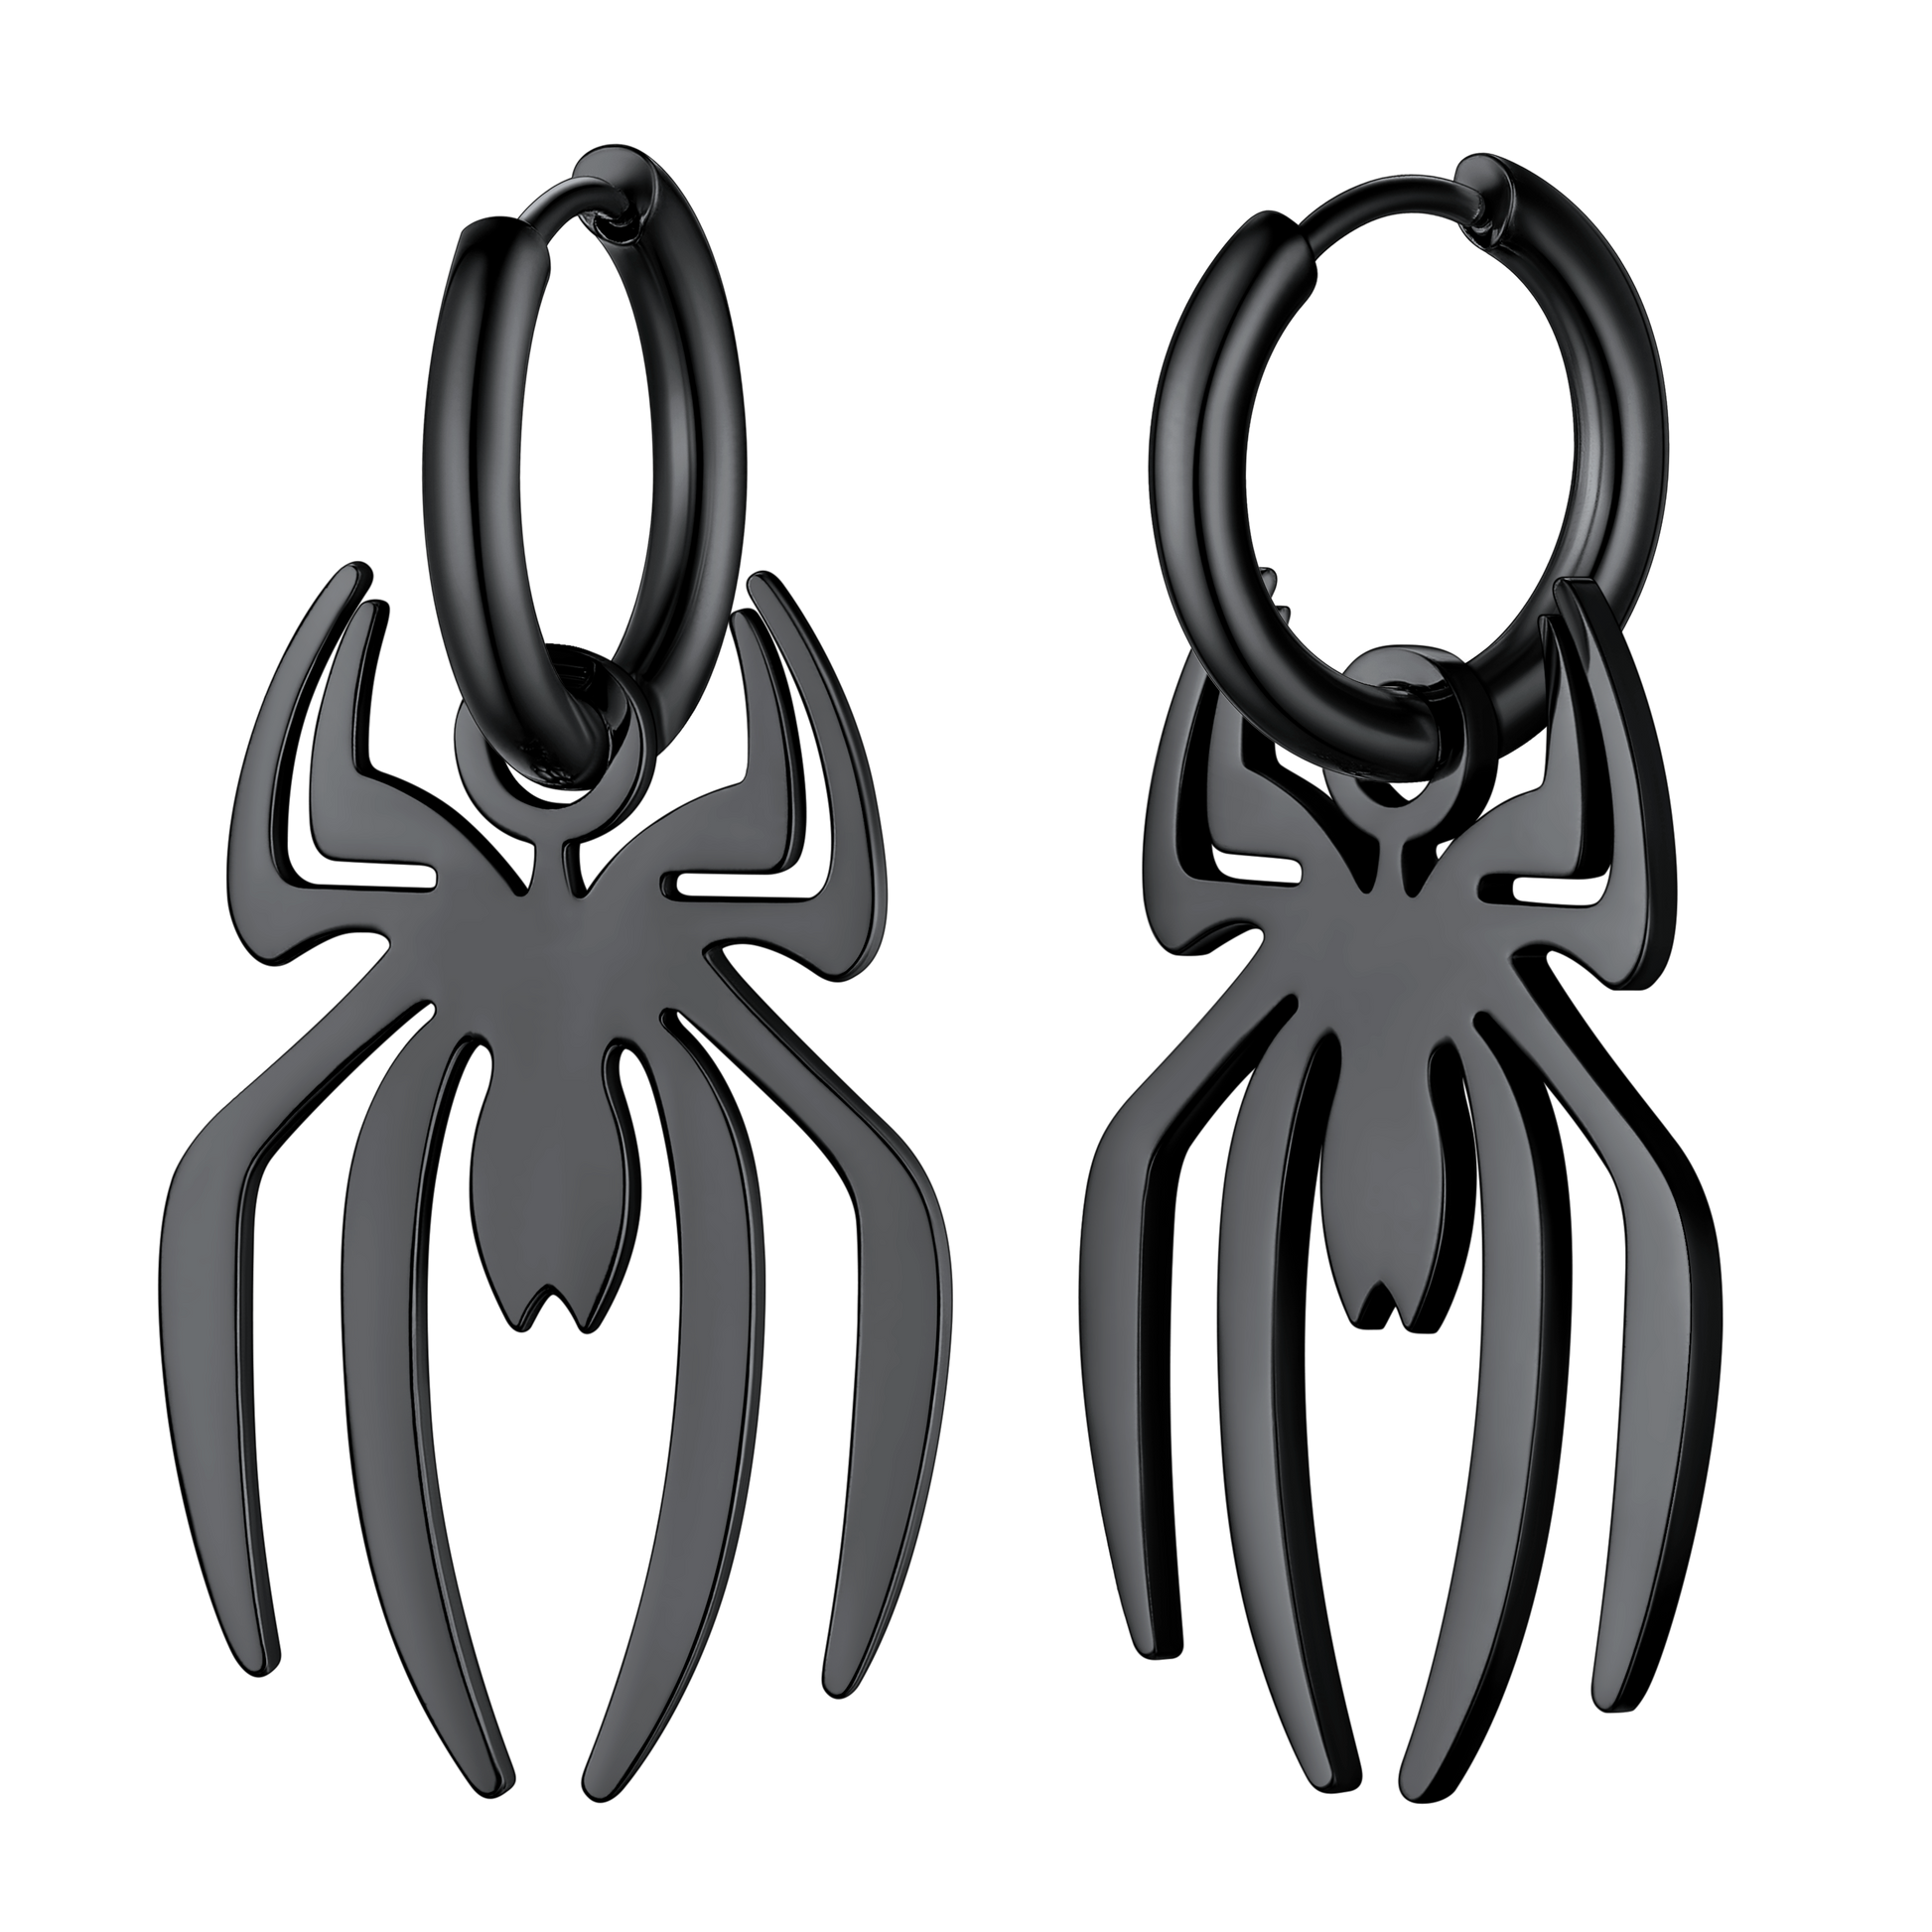 FaithHeart Gothic Spider Drop Earrings Stainless Steel FaithHeart